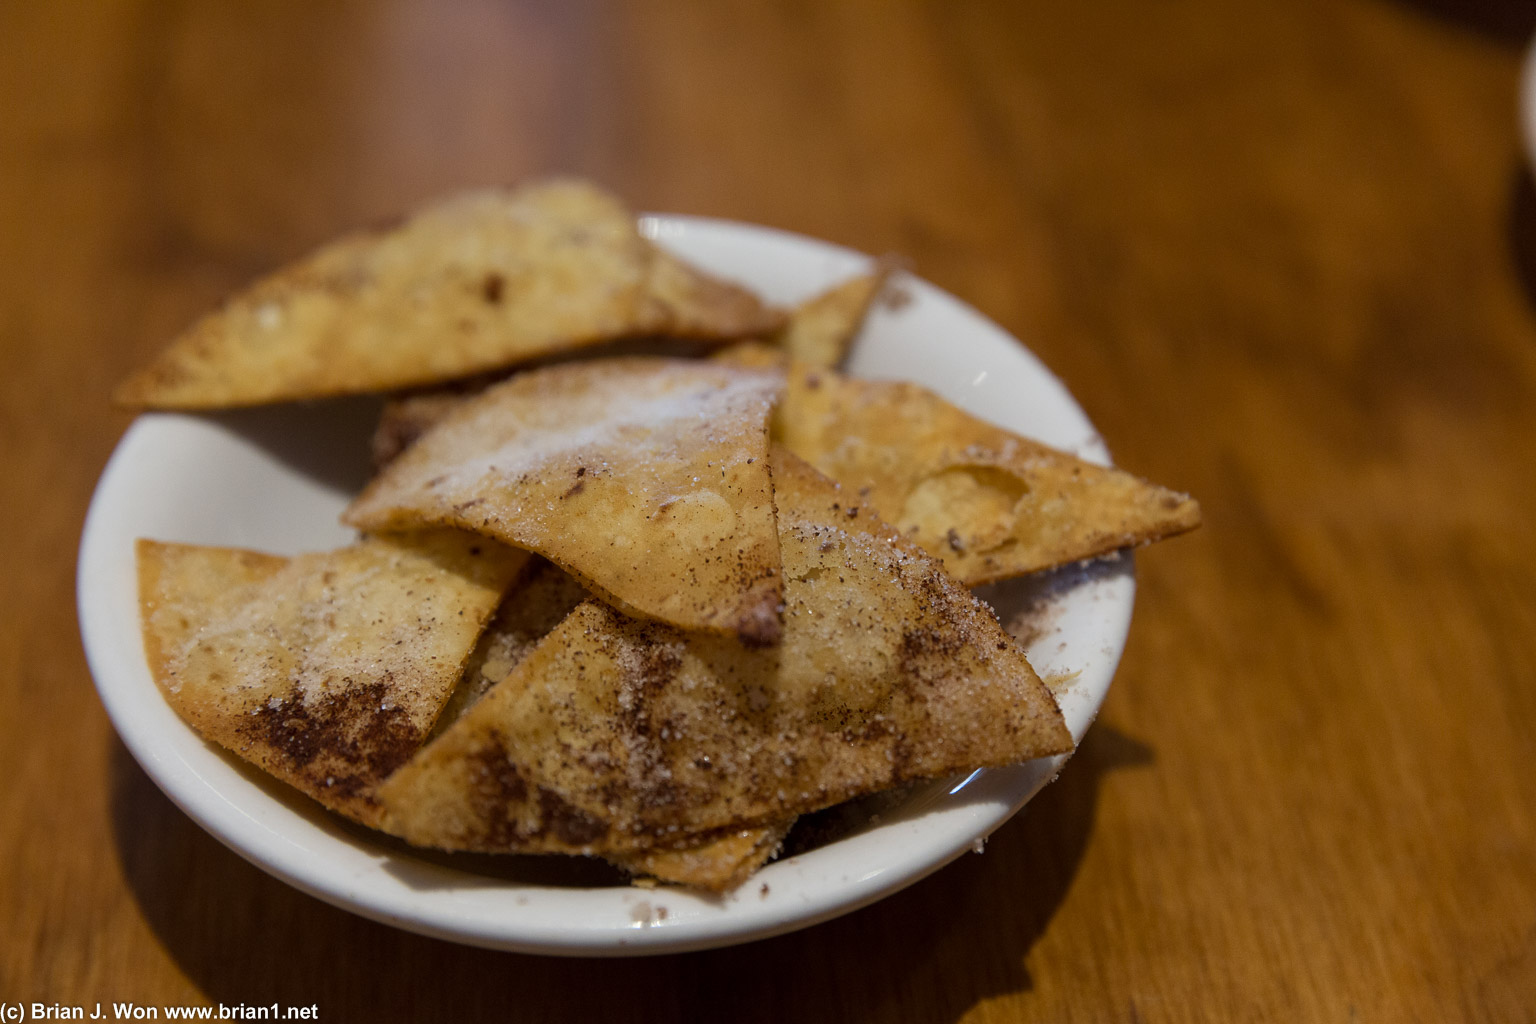 Homemade cinnamon sugar chips. Very tasty.